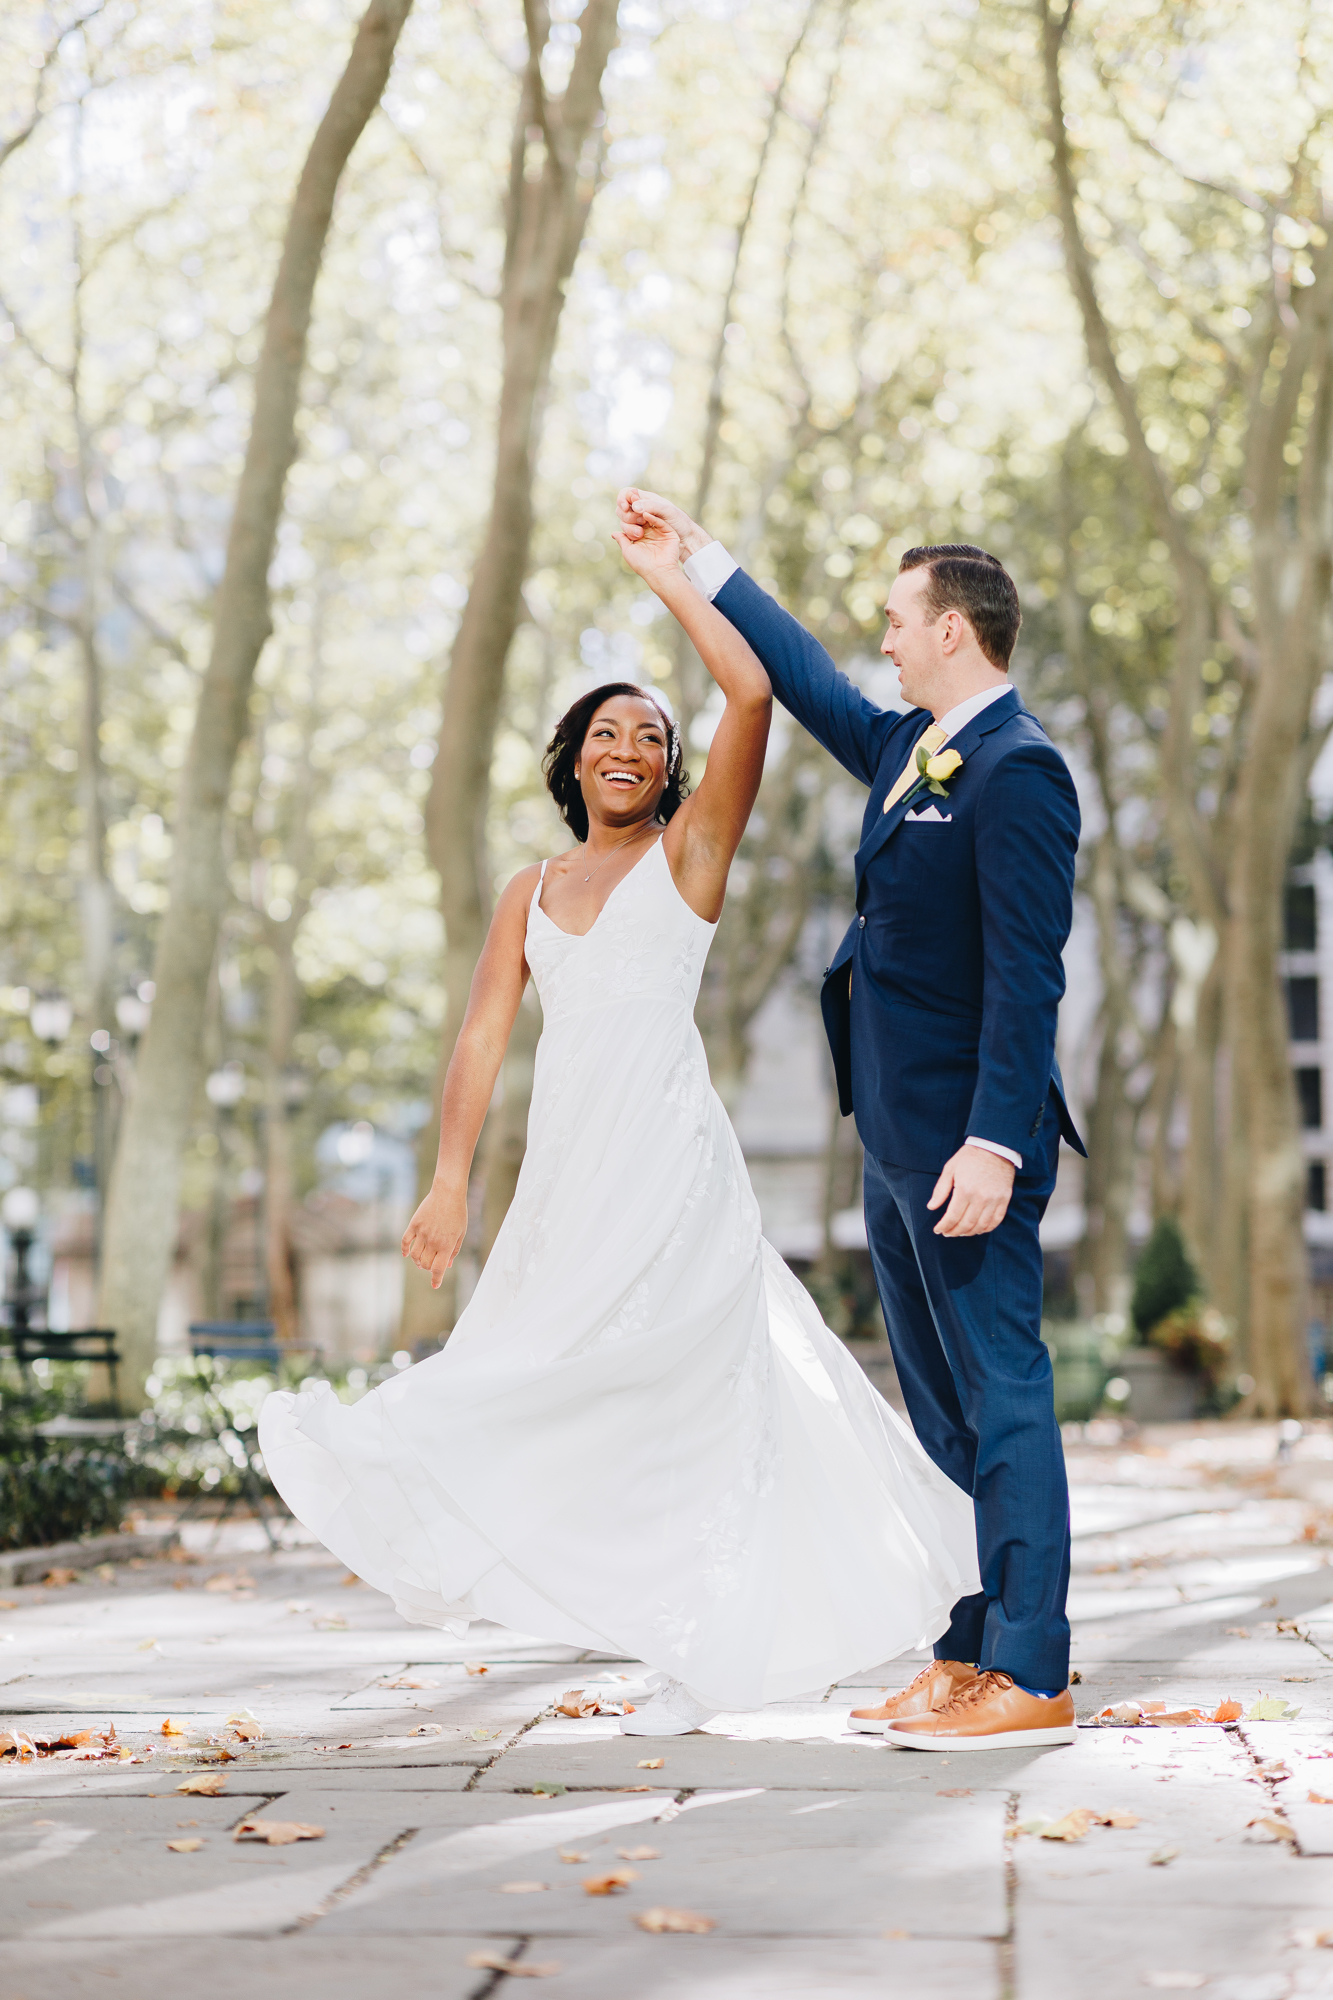 Sunny Bryant Park Wedding Photos during New York Elopement